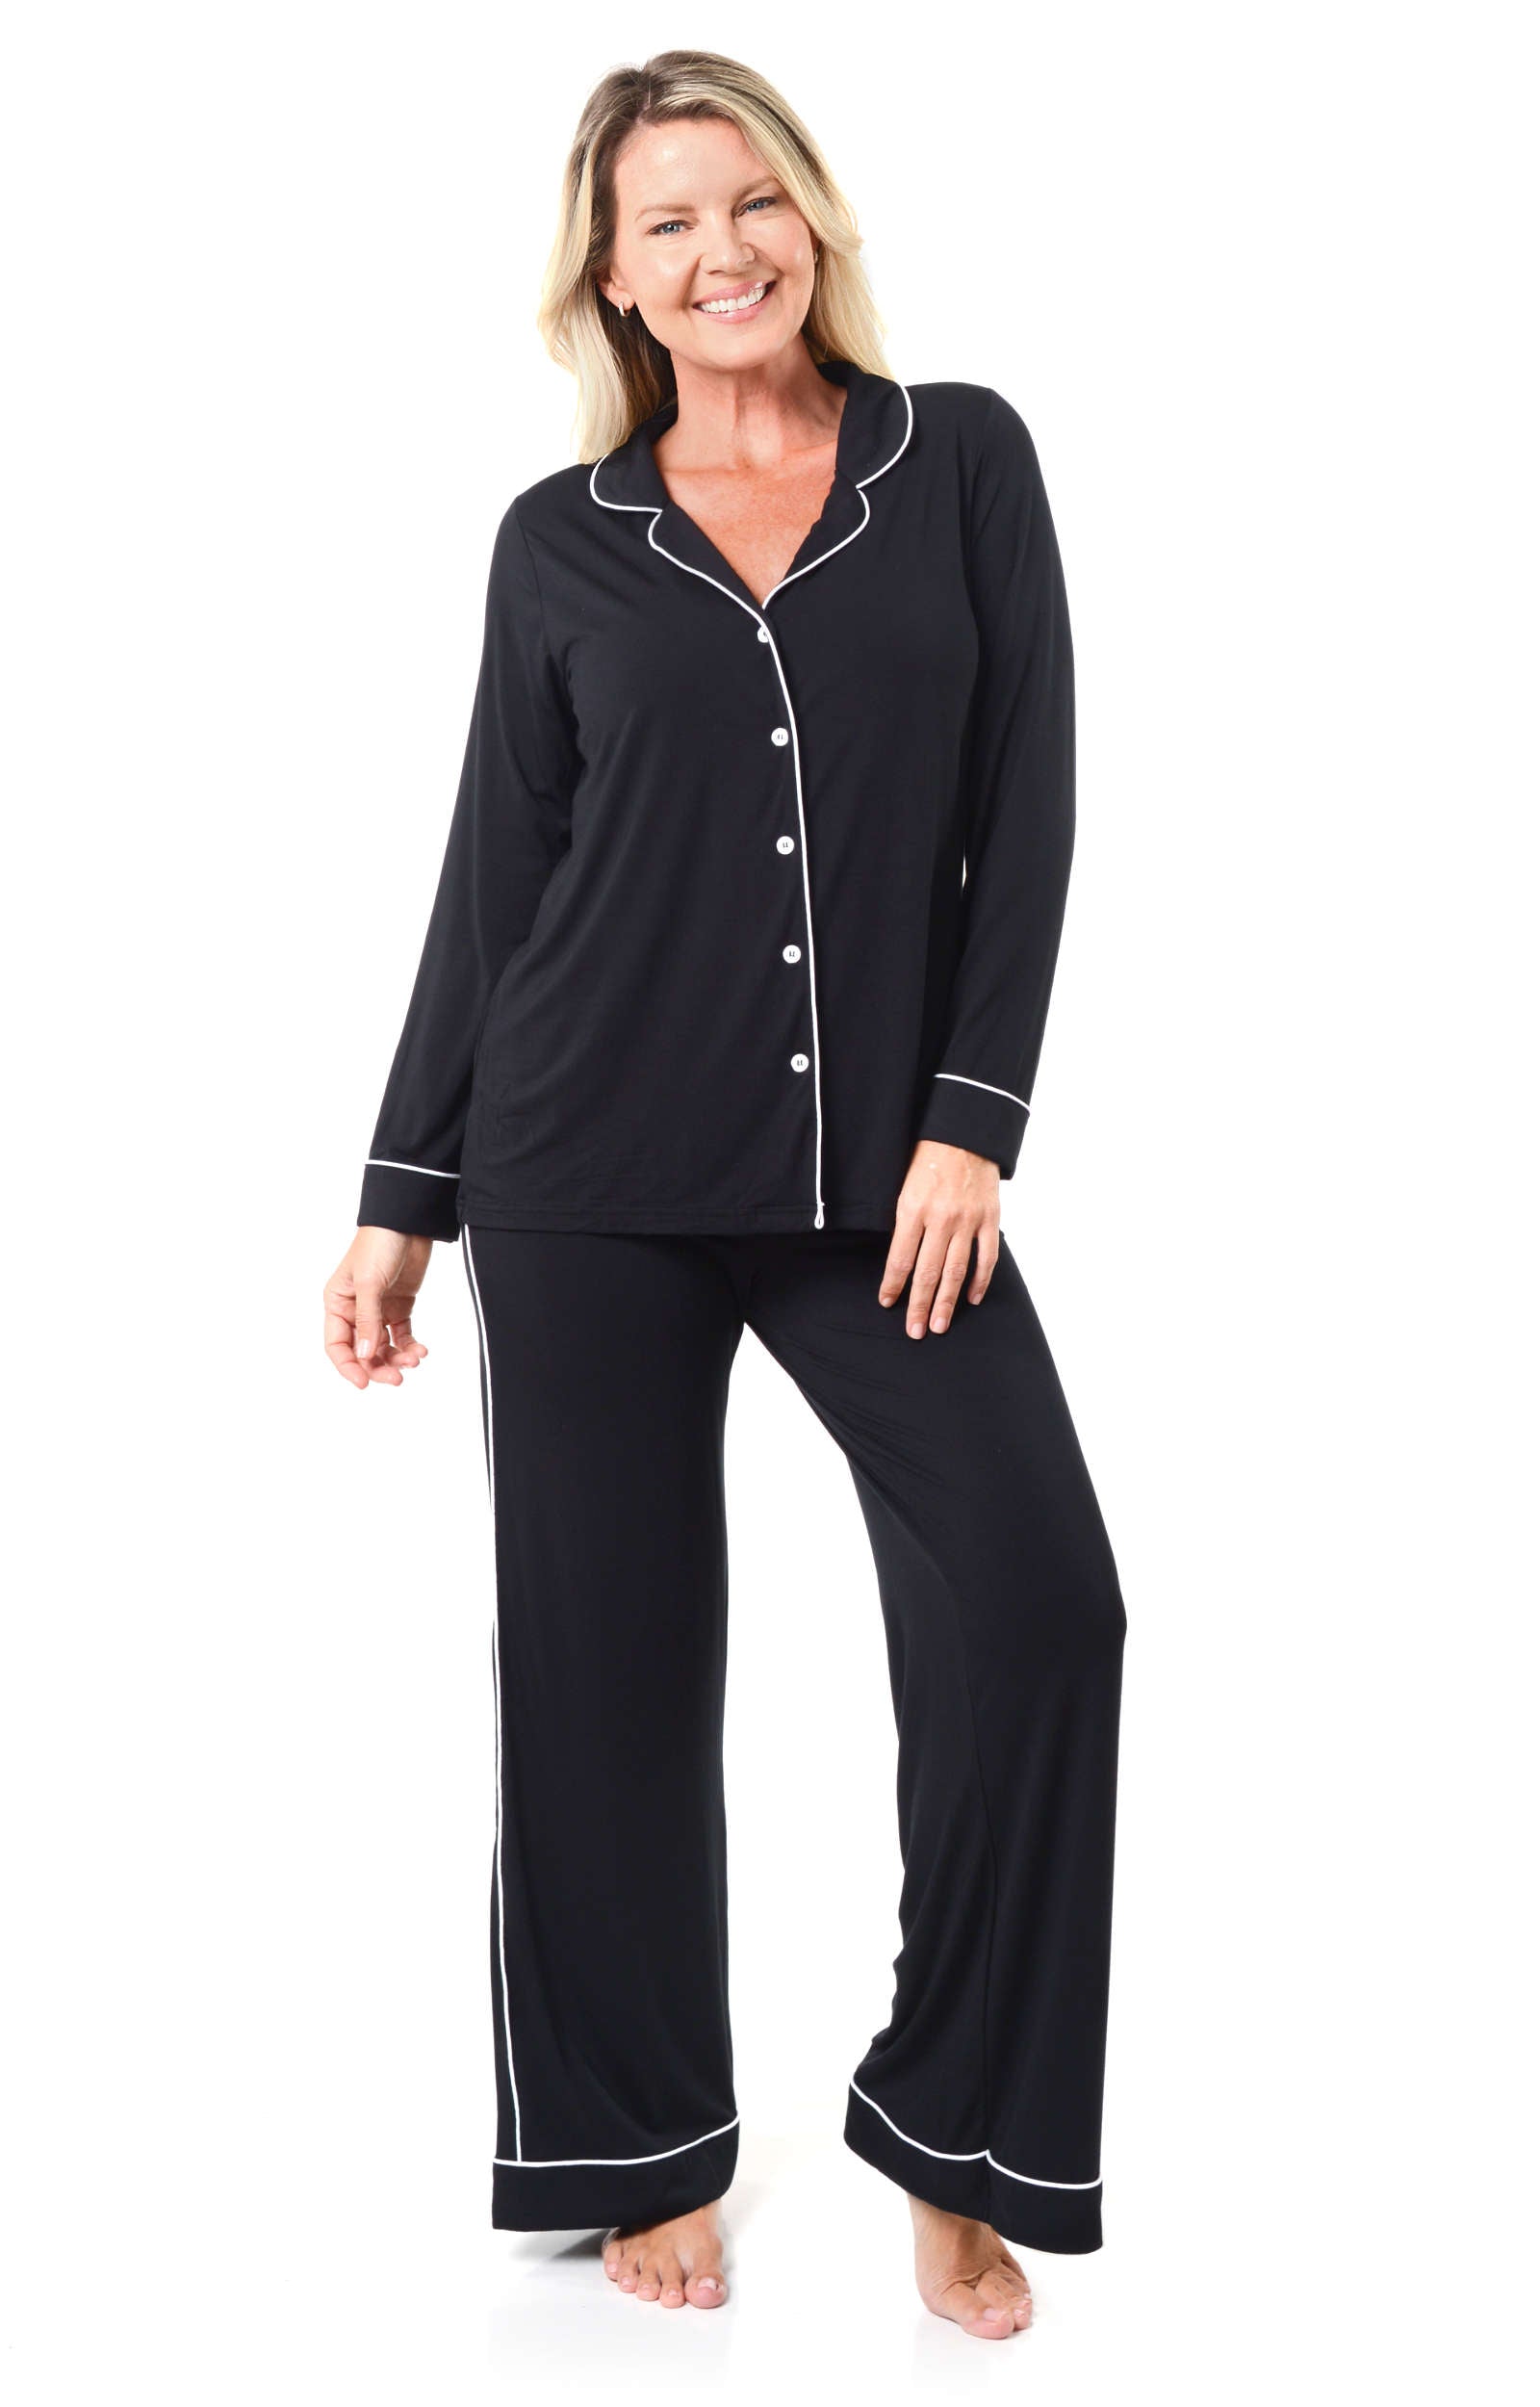 Women's Long Sleeve Cool and Comfy Bamboo Pajamas - Pj Set